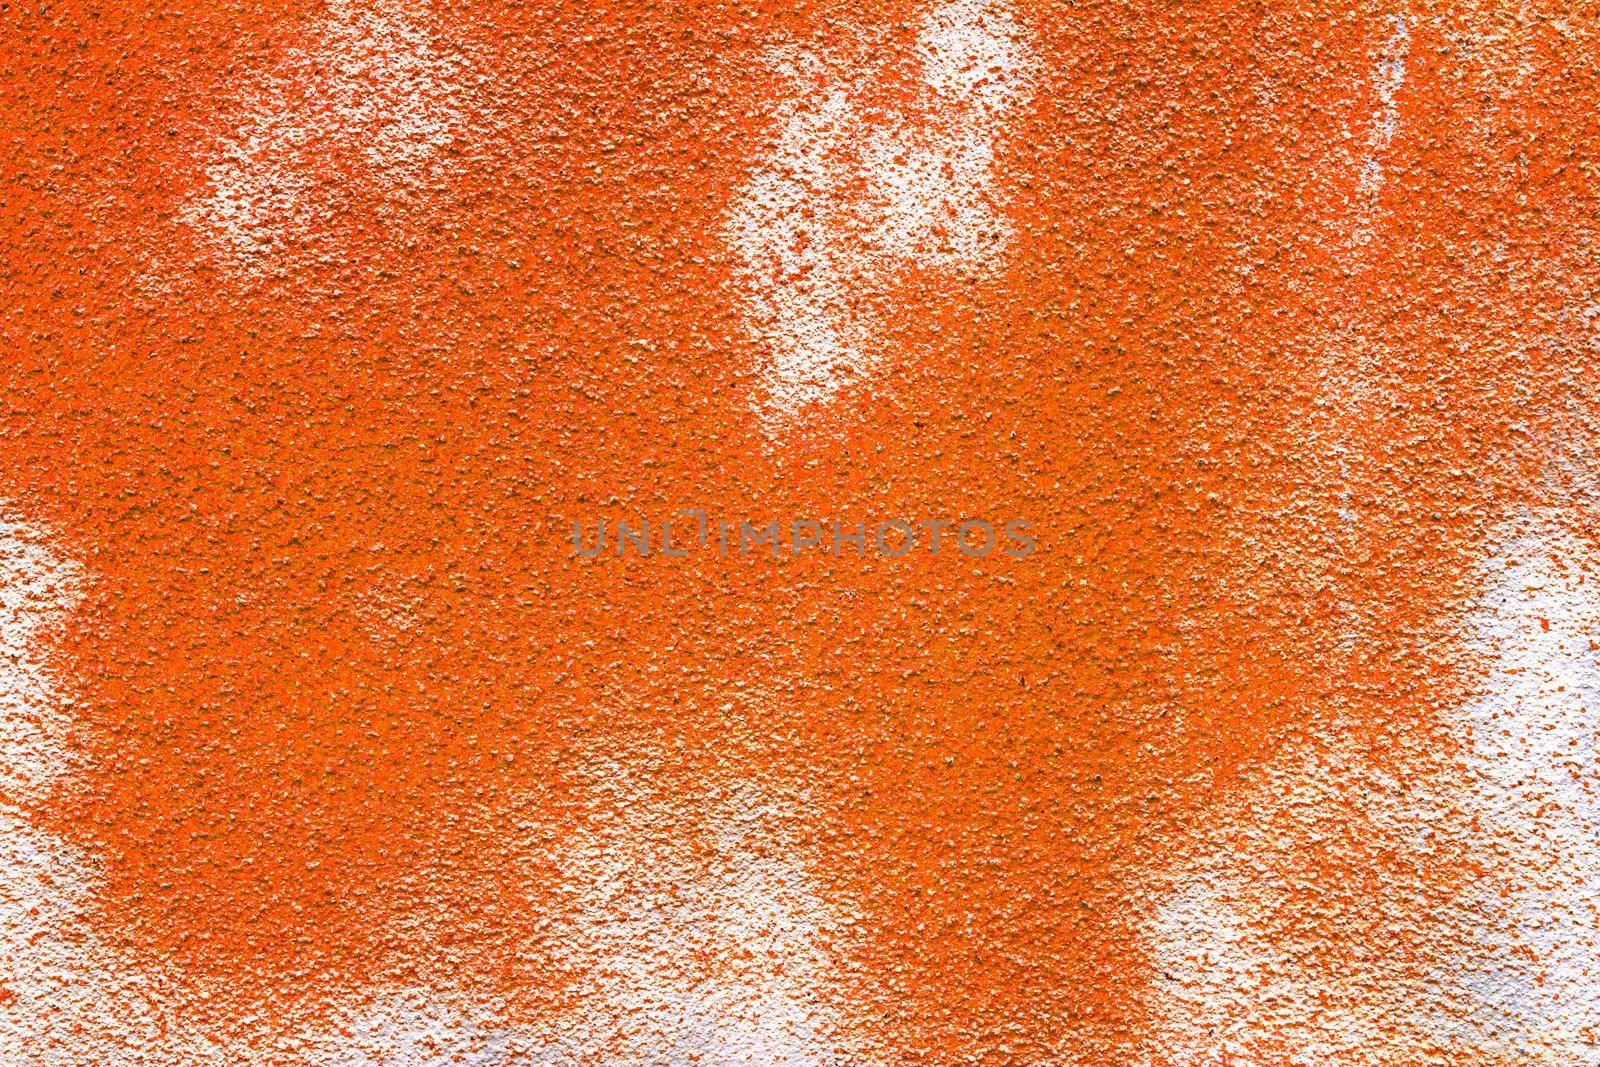 Orange concrete wall texture by germanopoli